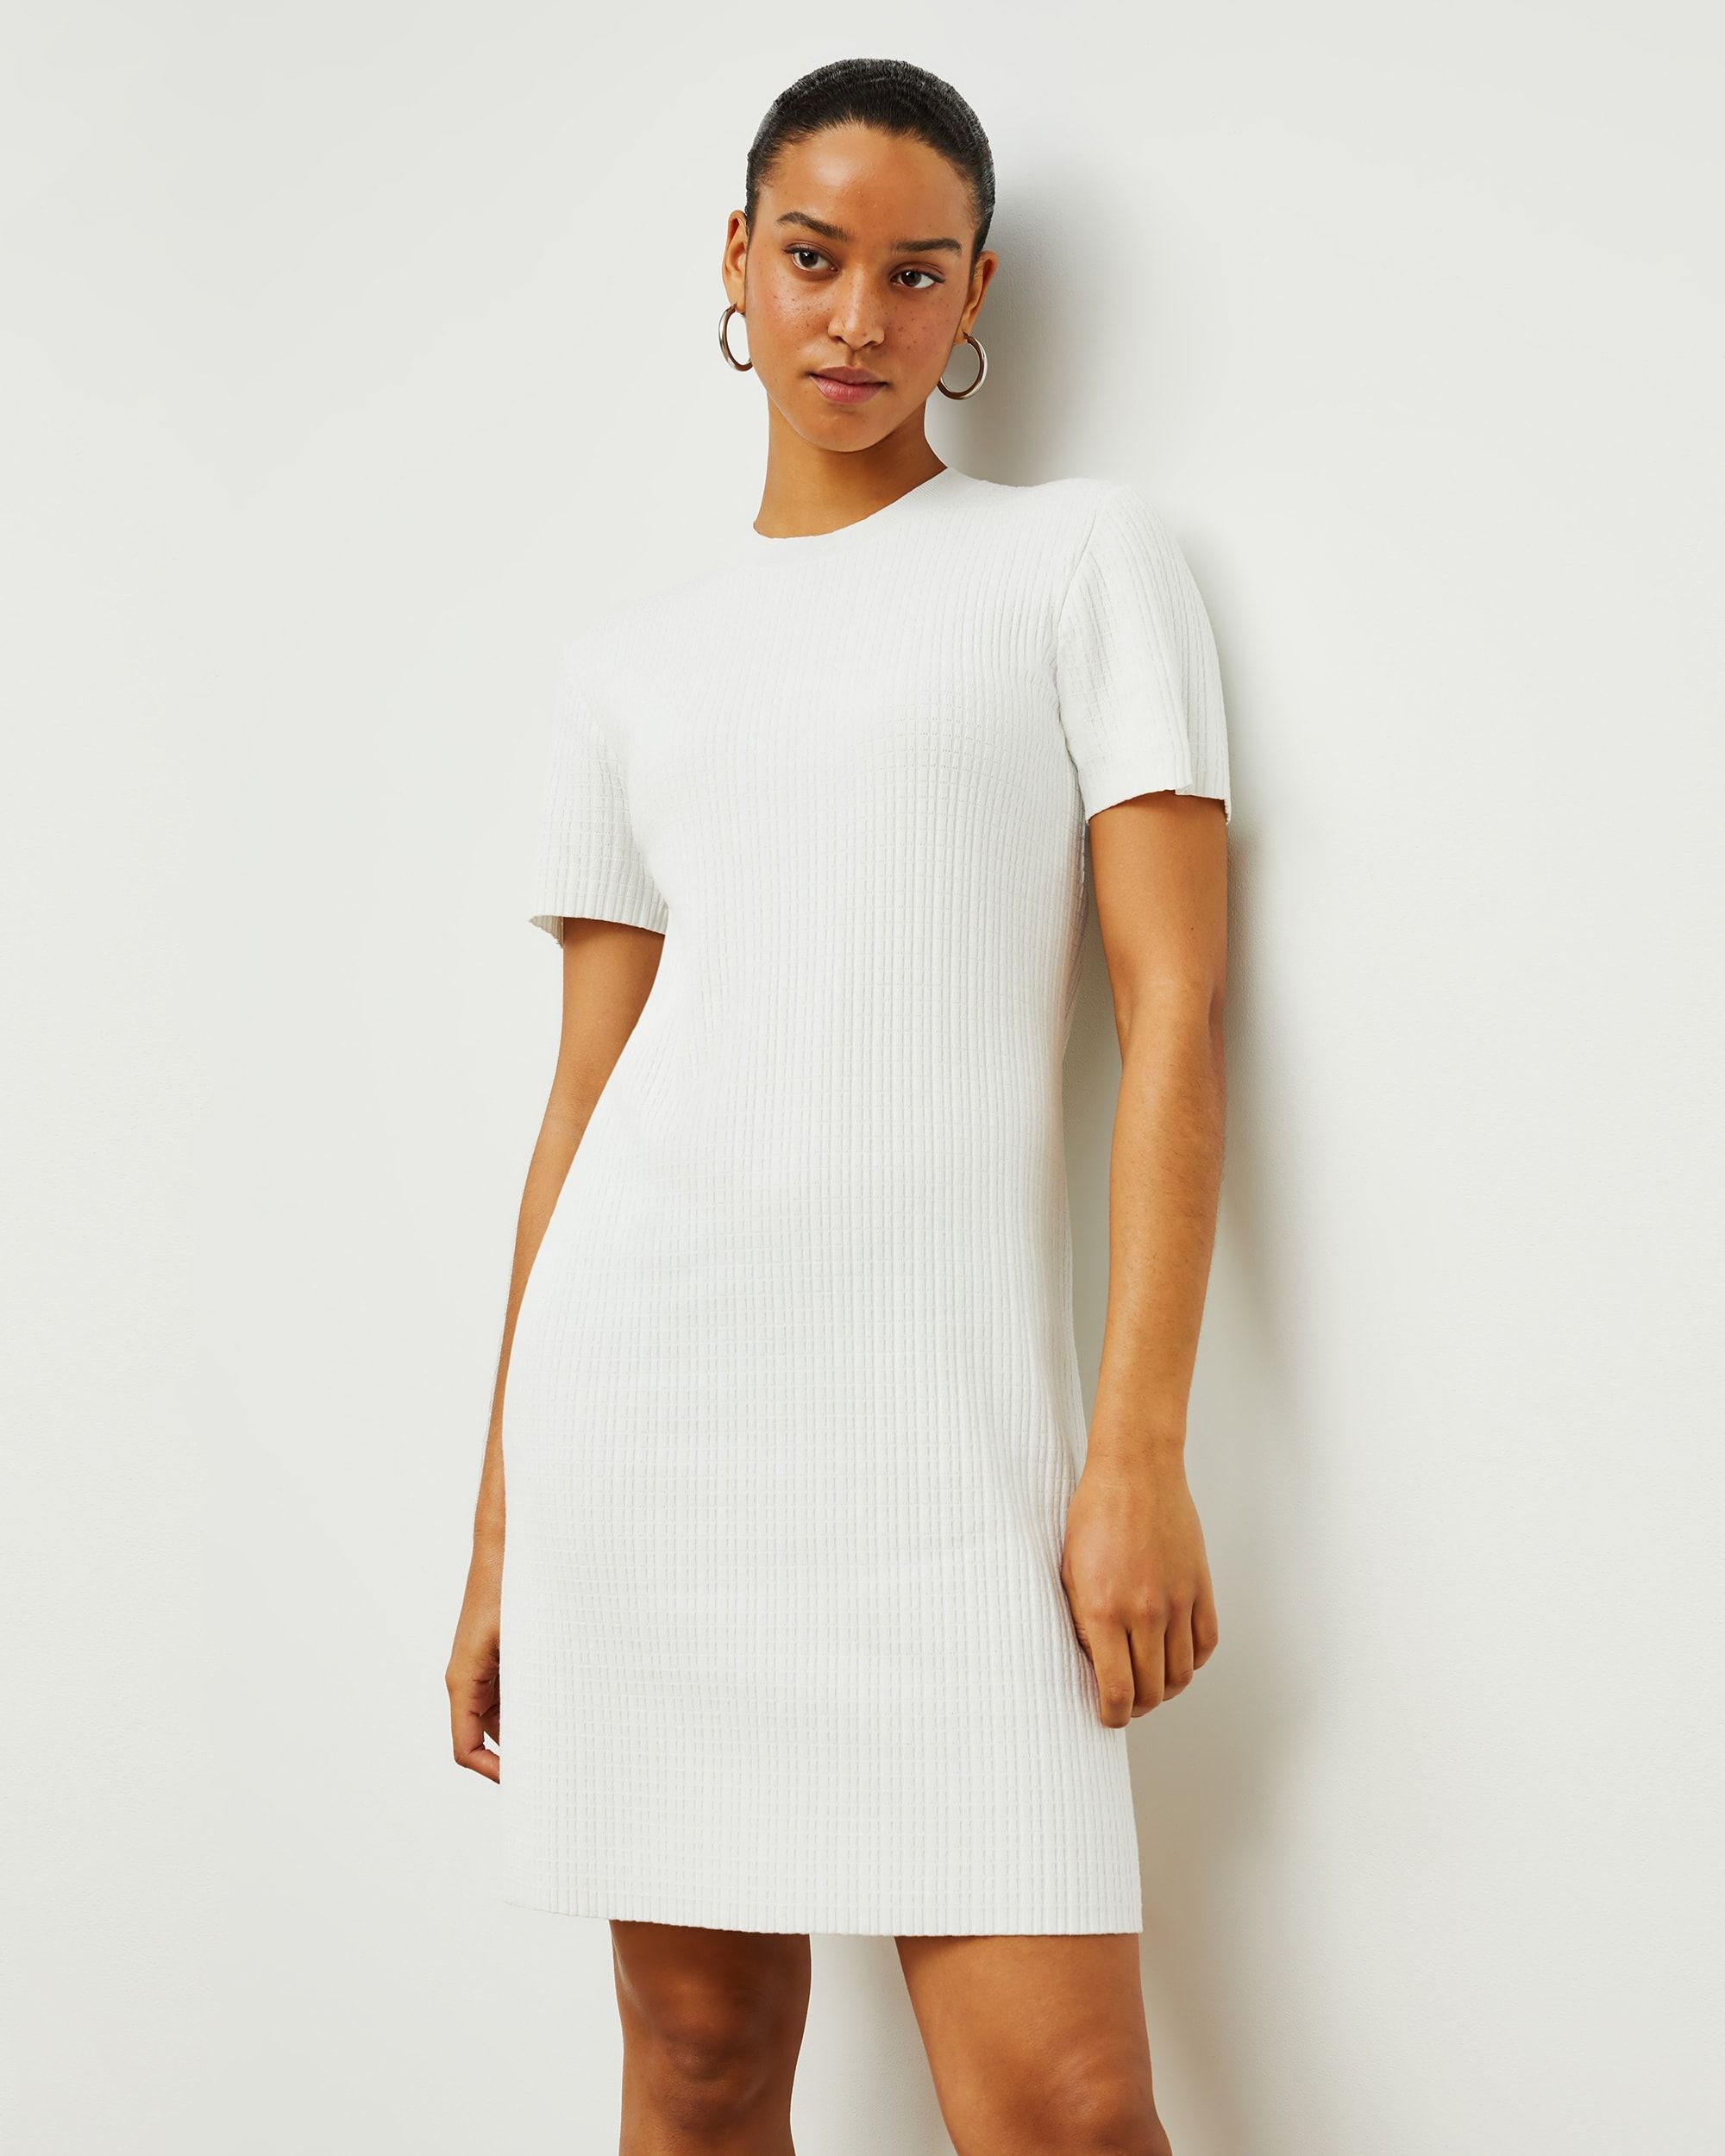 Pretty White Dresses For Stylish Women - KAYNULI